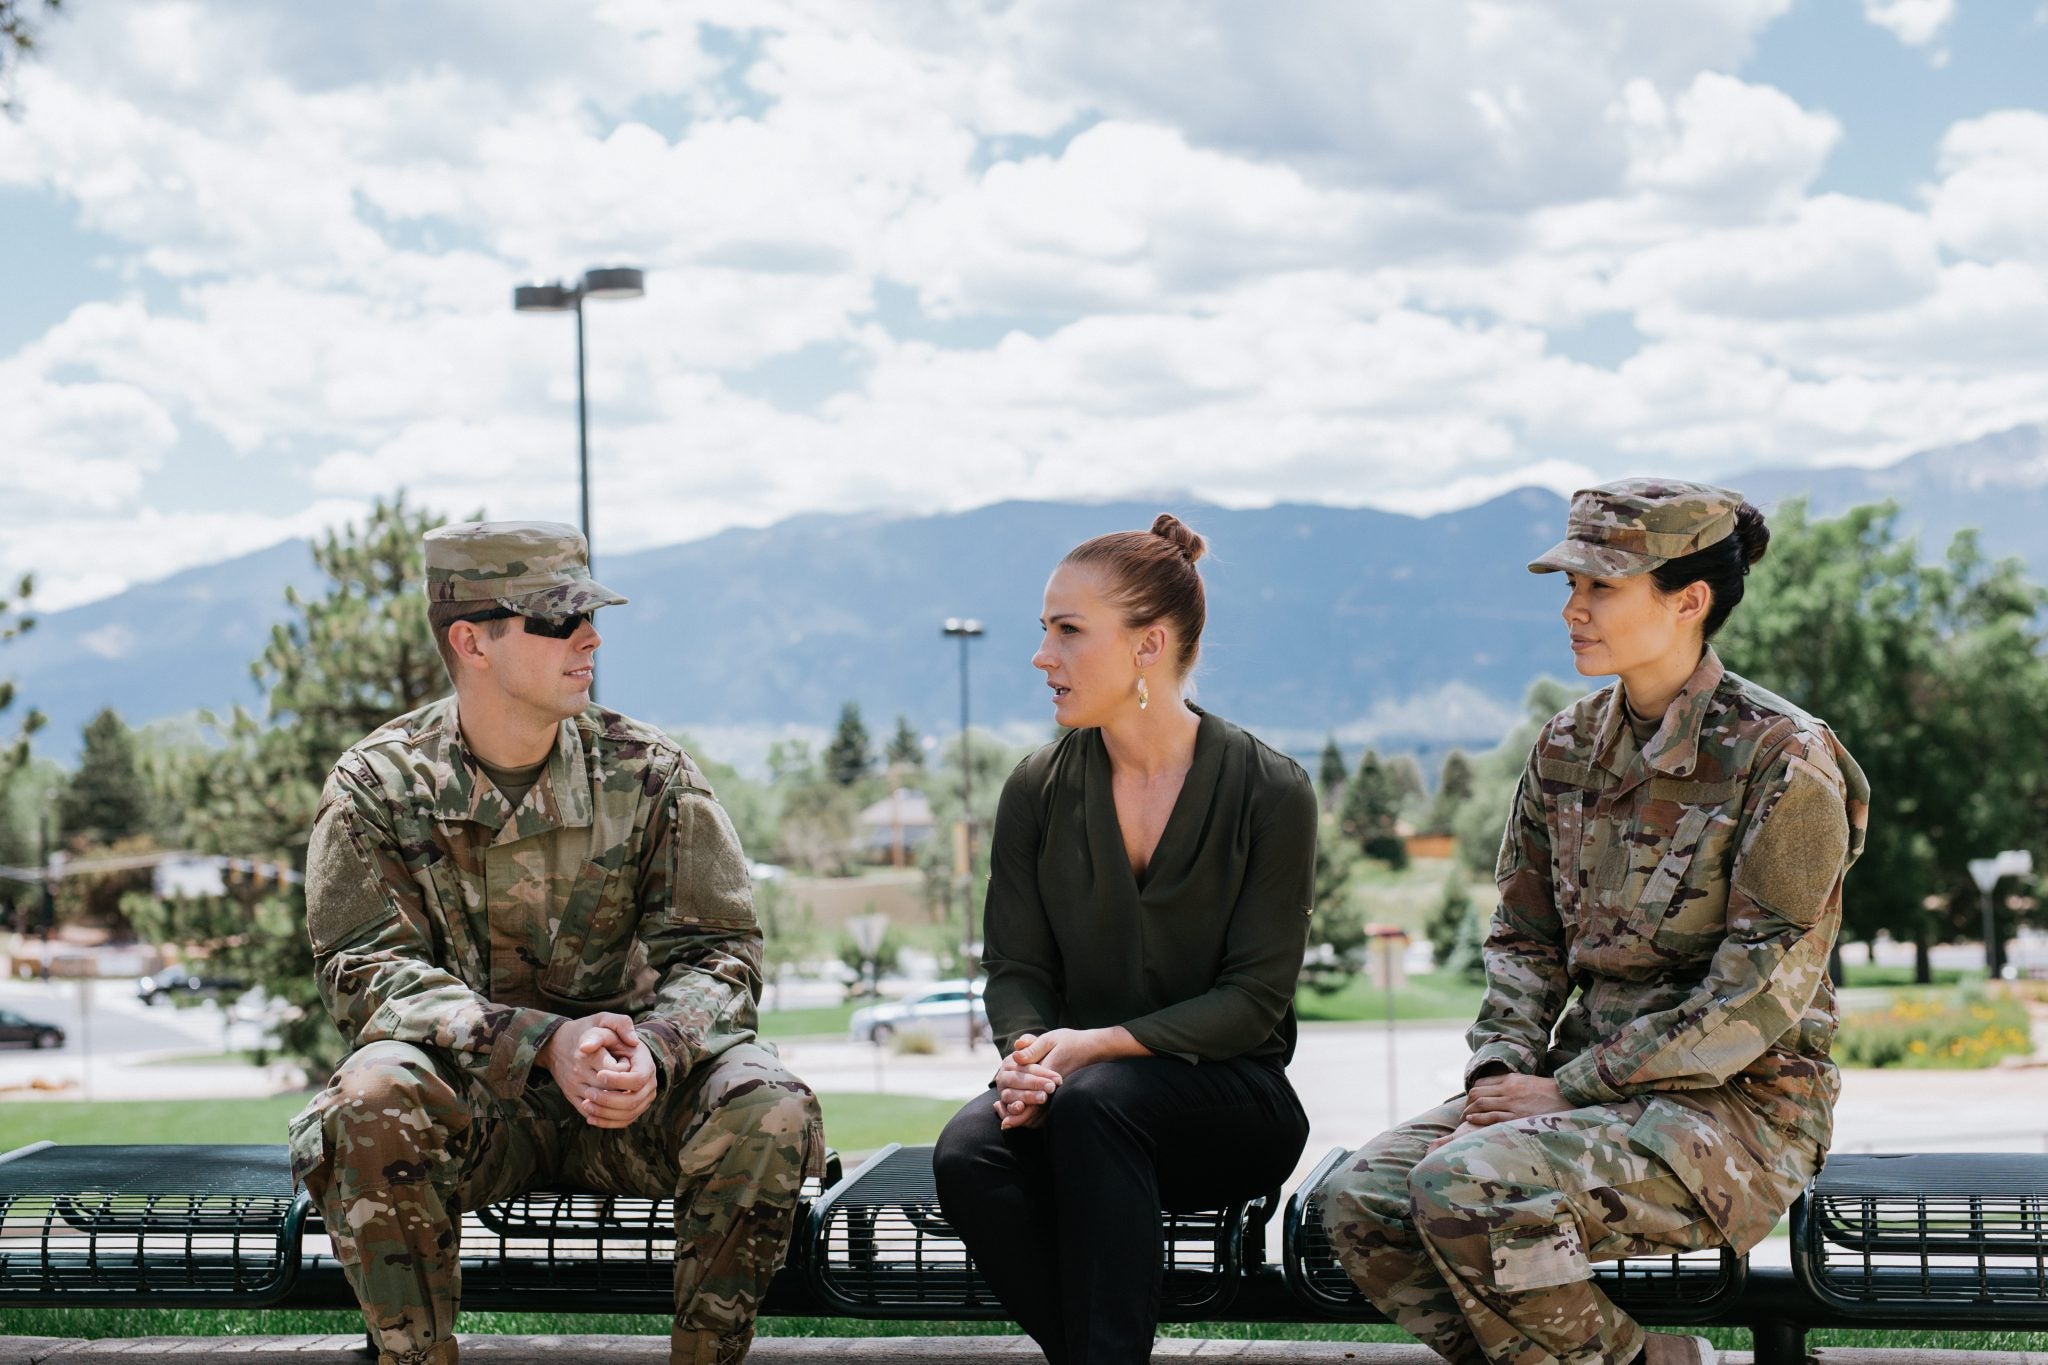 UCCS earns Military Spouse Friendly designation